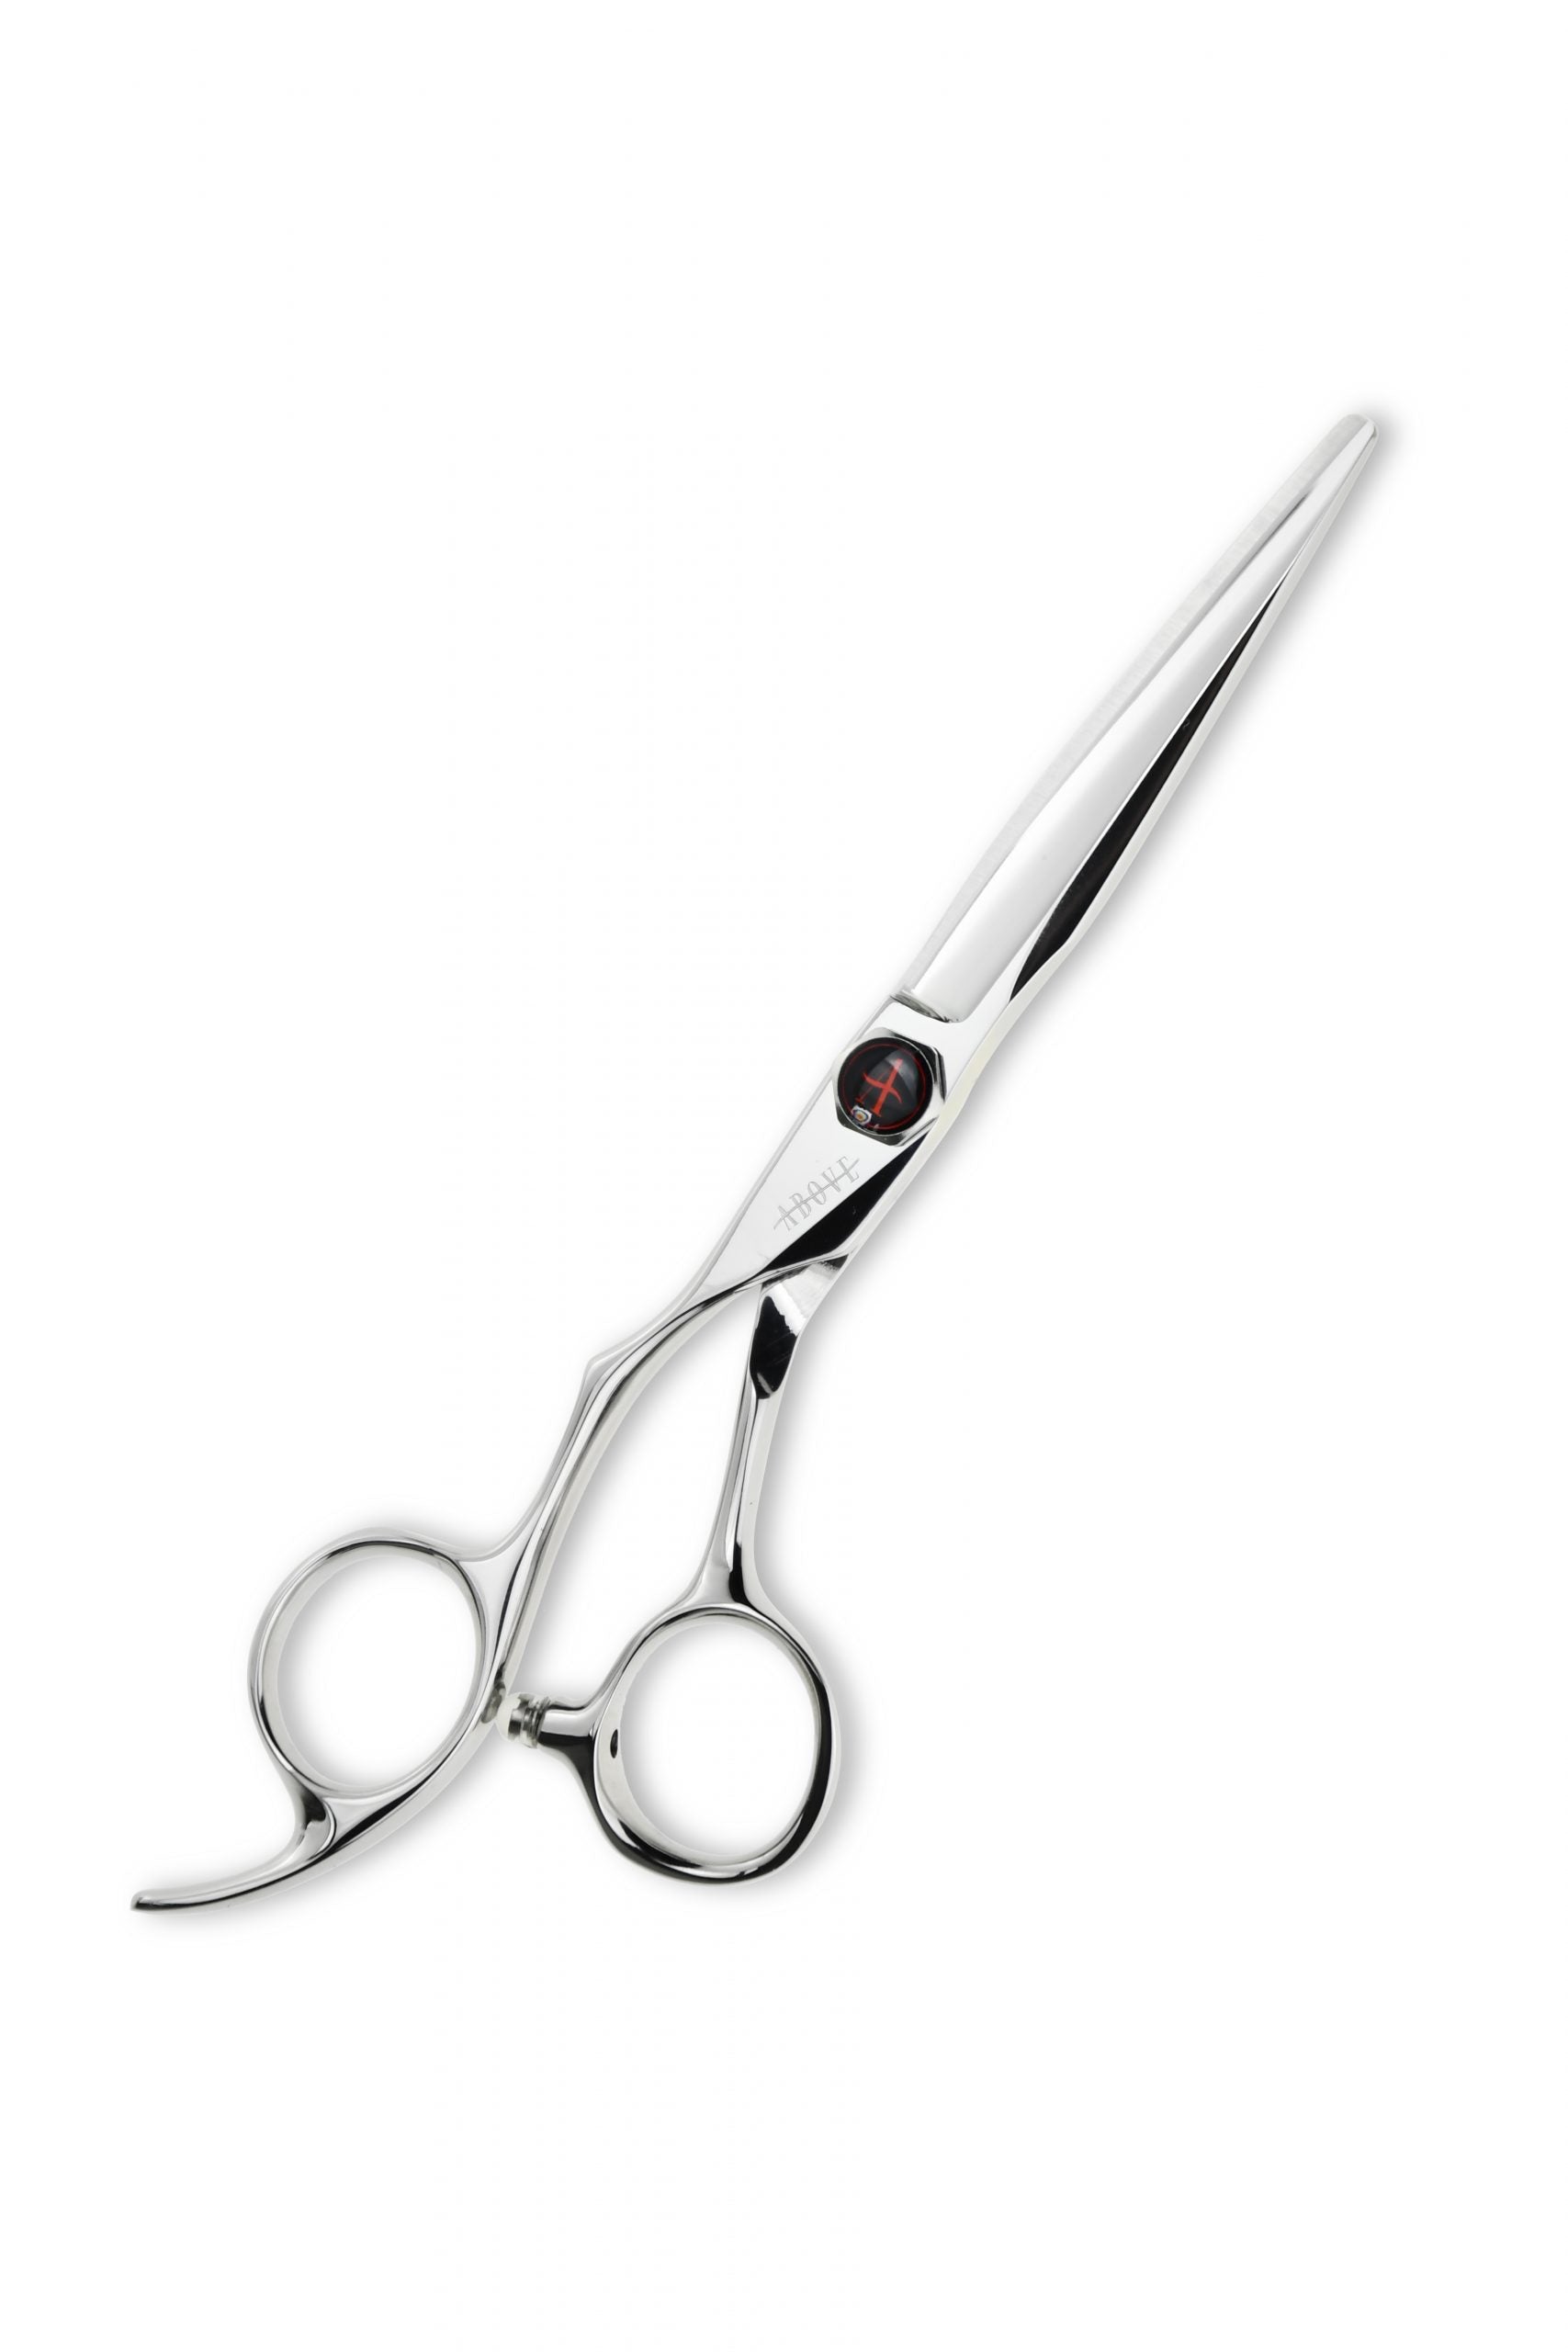 Above Shears C20 Finest Option for All Rounder Scissors